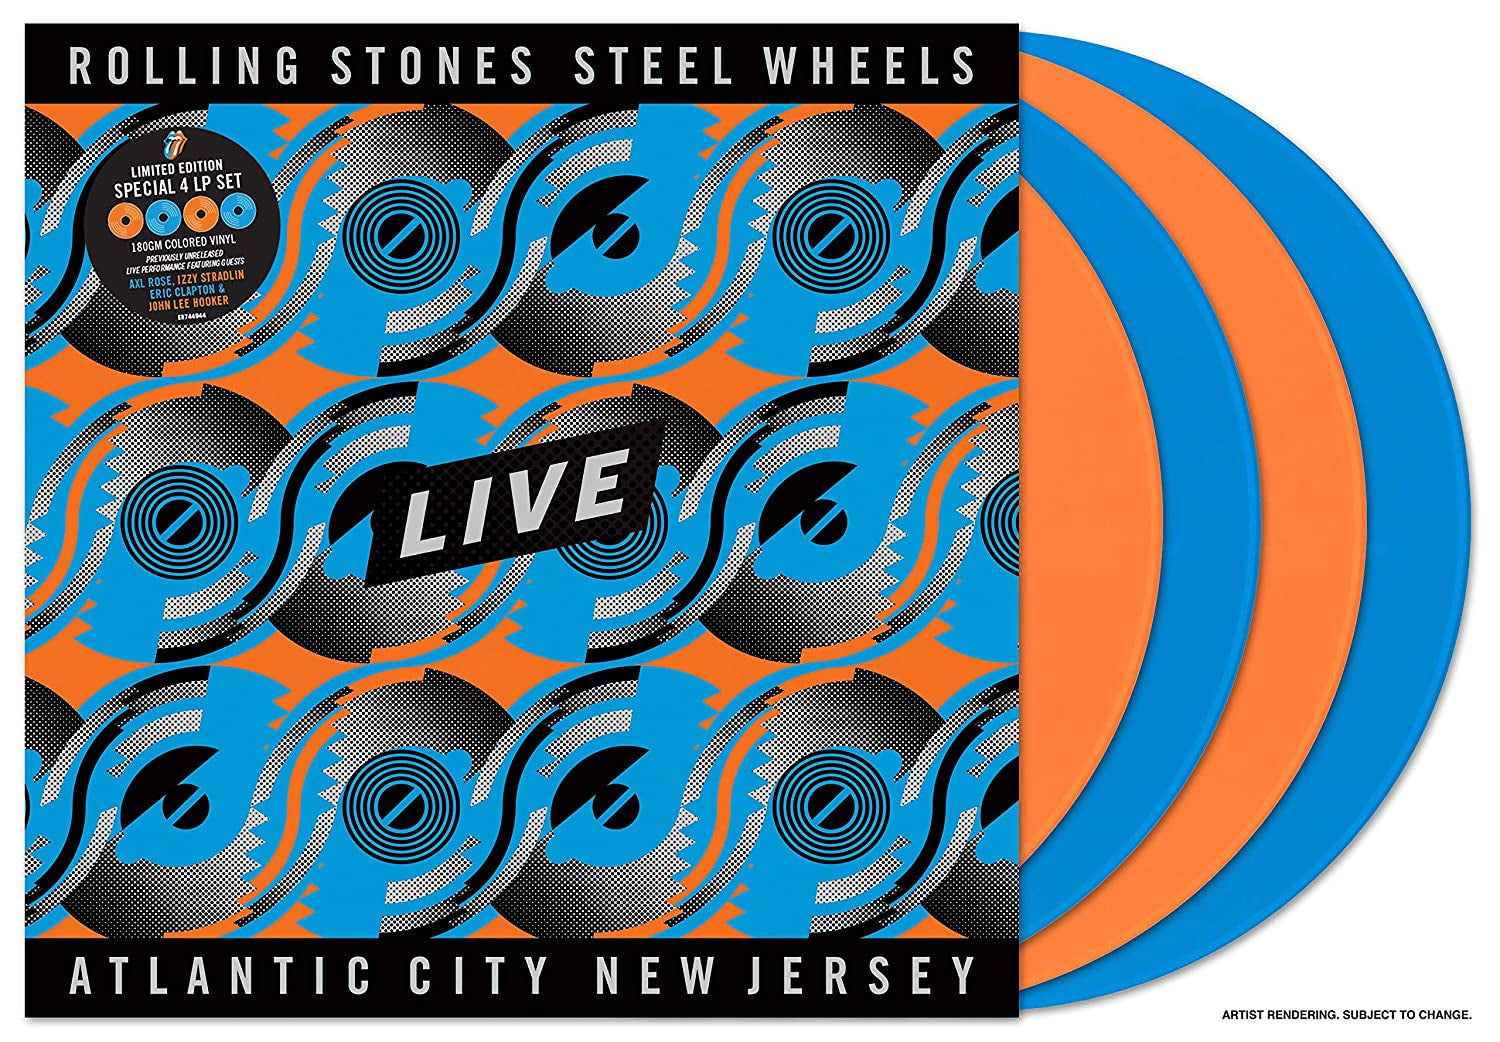 Rolling трек. The Rolling Stones Steel Wheels 1989. Rolling Stones "Steel Wheels". The Rolling Stones - Steel Wheels Live. Rolling Stones Steel Wheels обложка альбома.